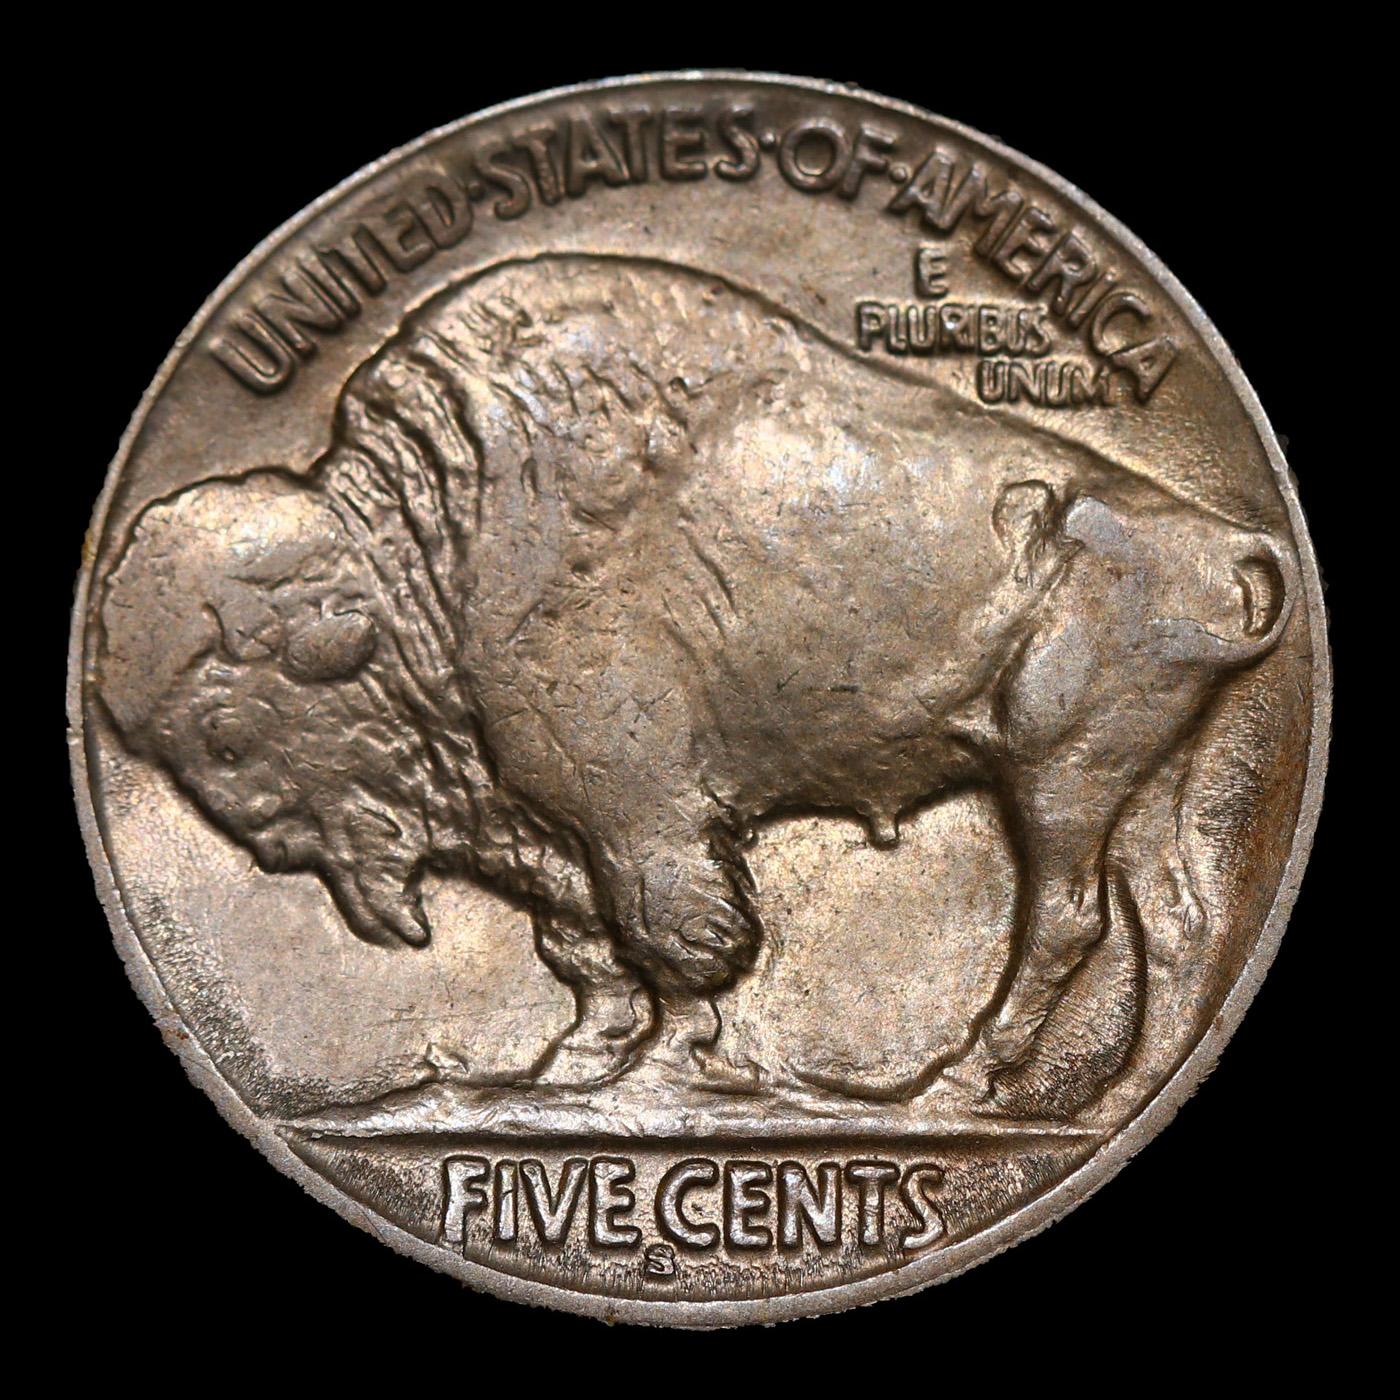 ***Auction Highlight*** 1917-s Buffalo Nickel 5c Graded au58 By SEGS (fc)